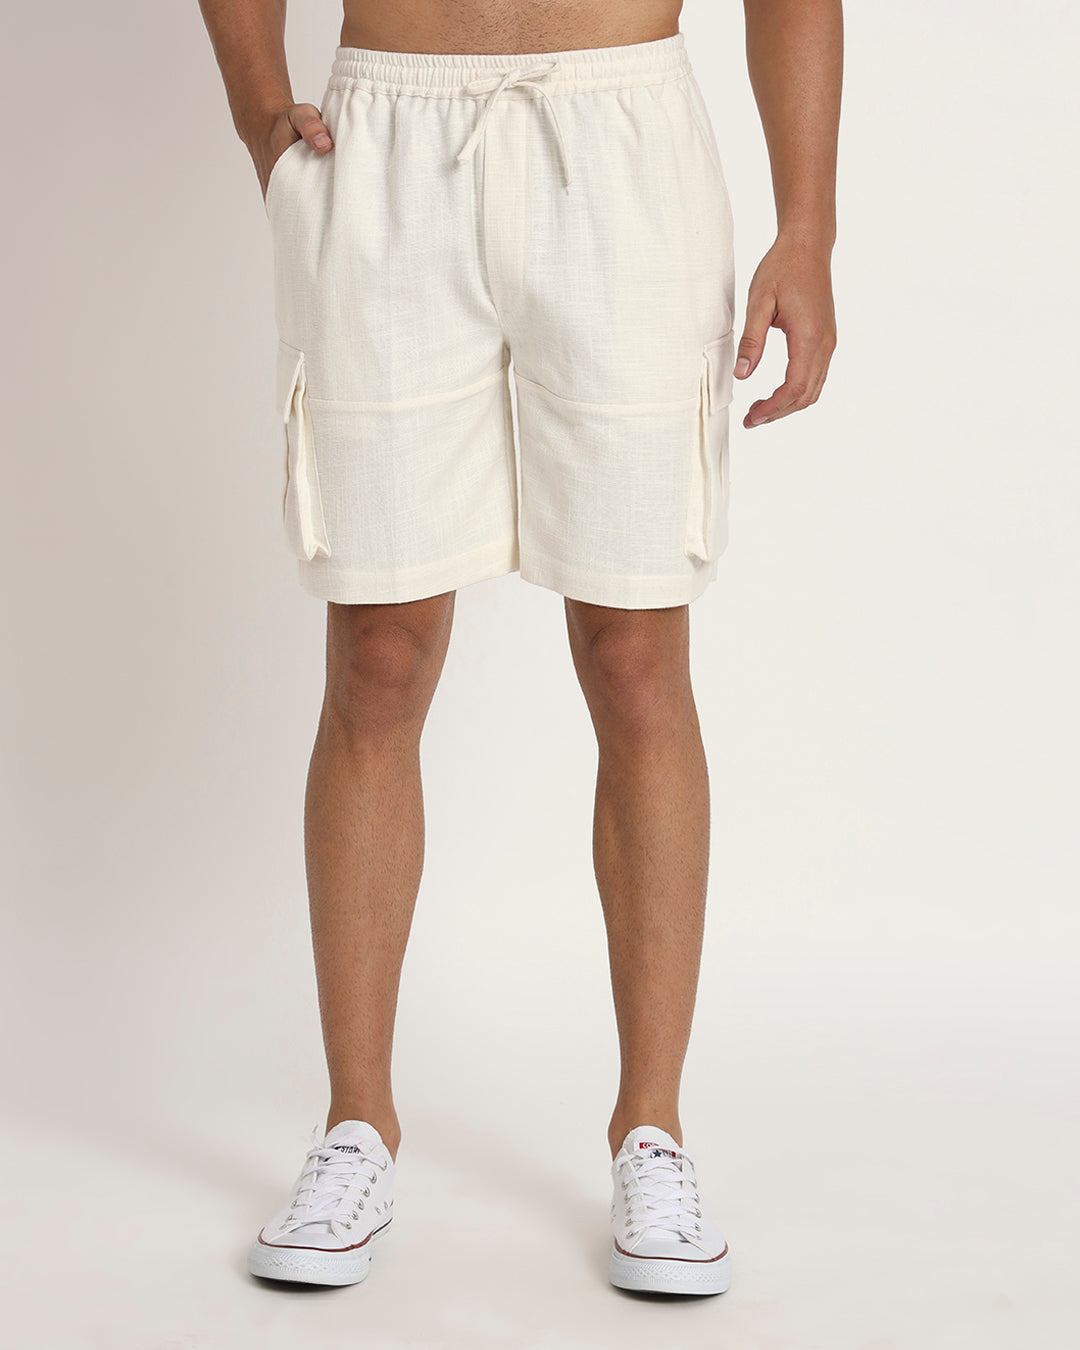 Combo: Classic Greening Spring Half Sleeves Men's Shirt & Cargo Shorts